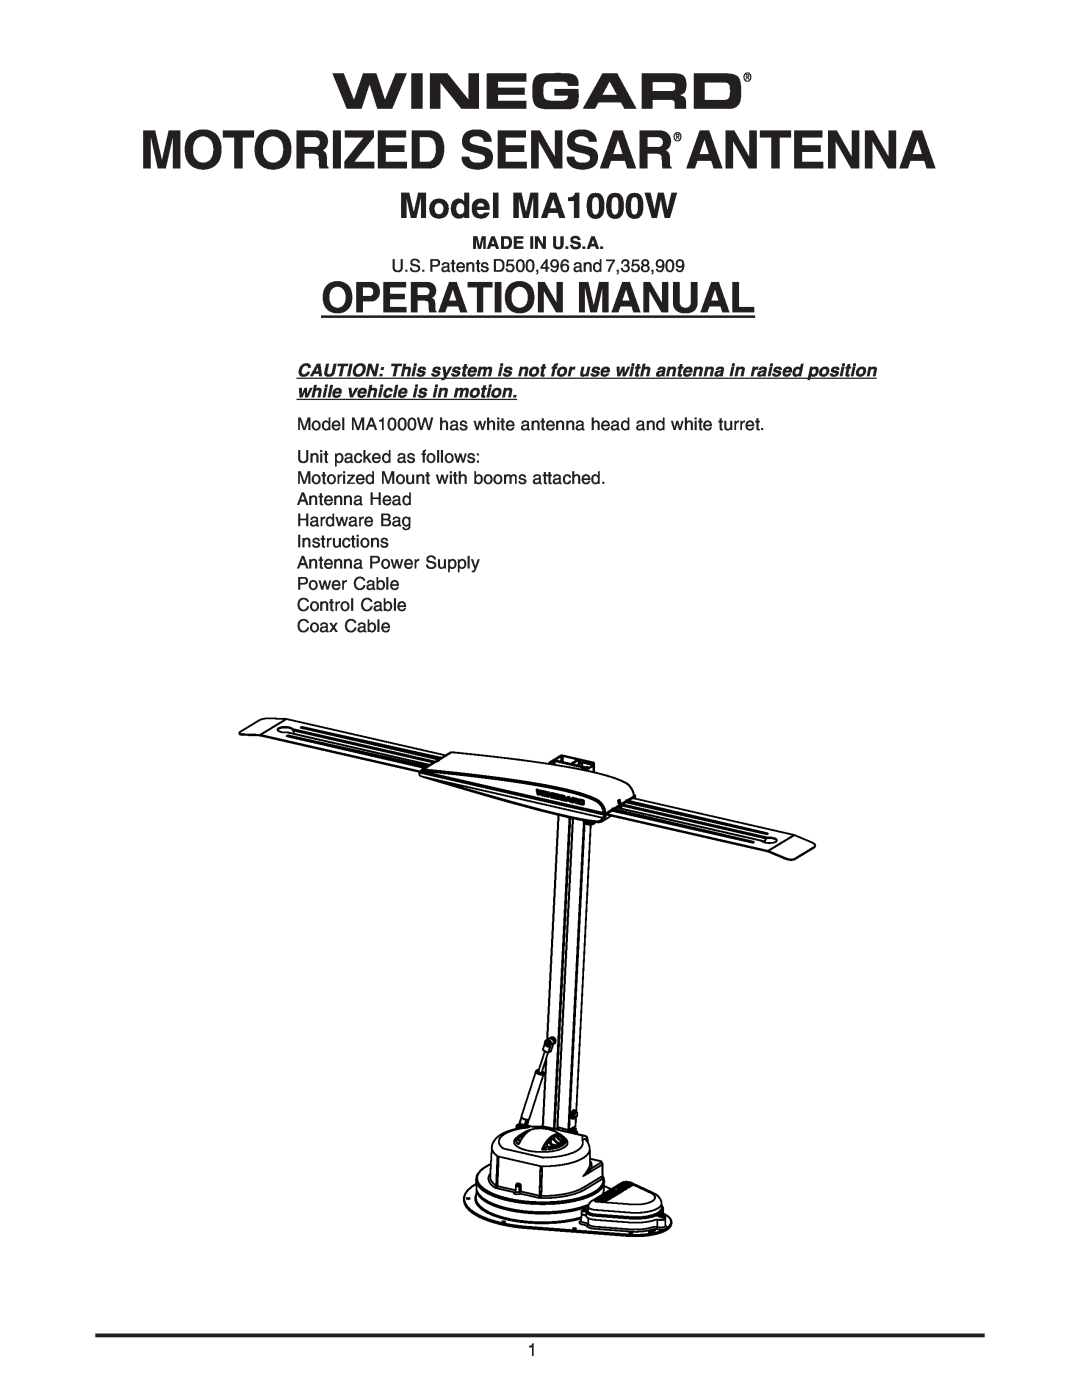 Winegard operation manual Made In U.S.A, Winegard Motorized Sensar Antenna, Operation Manual, Model MA1000W 